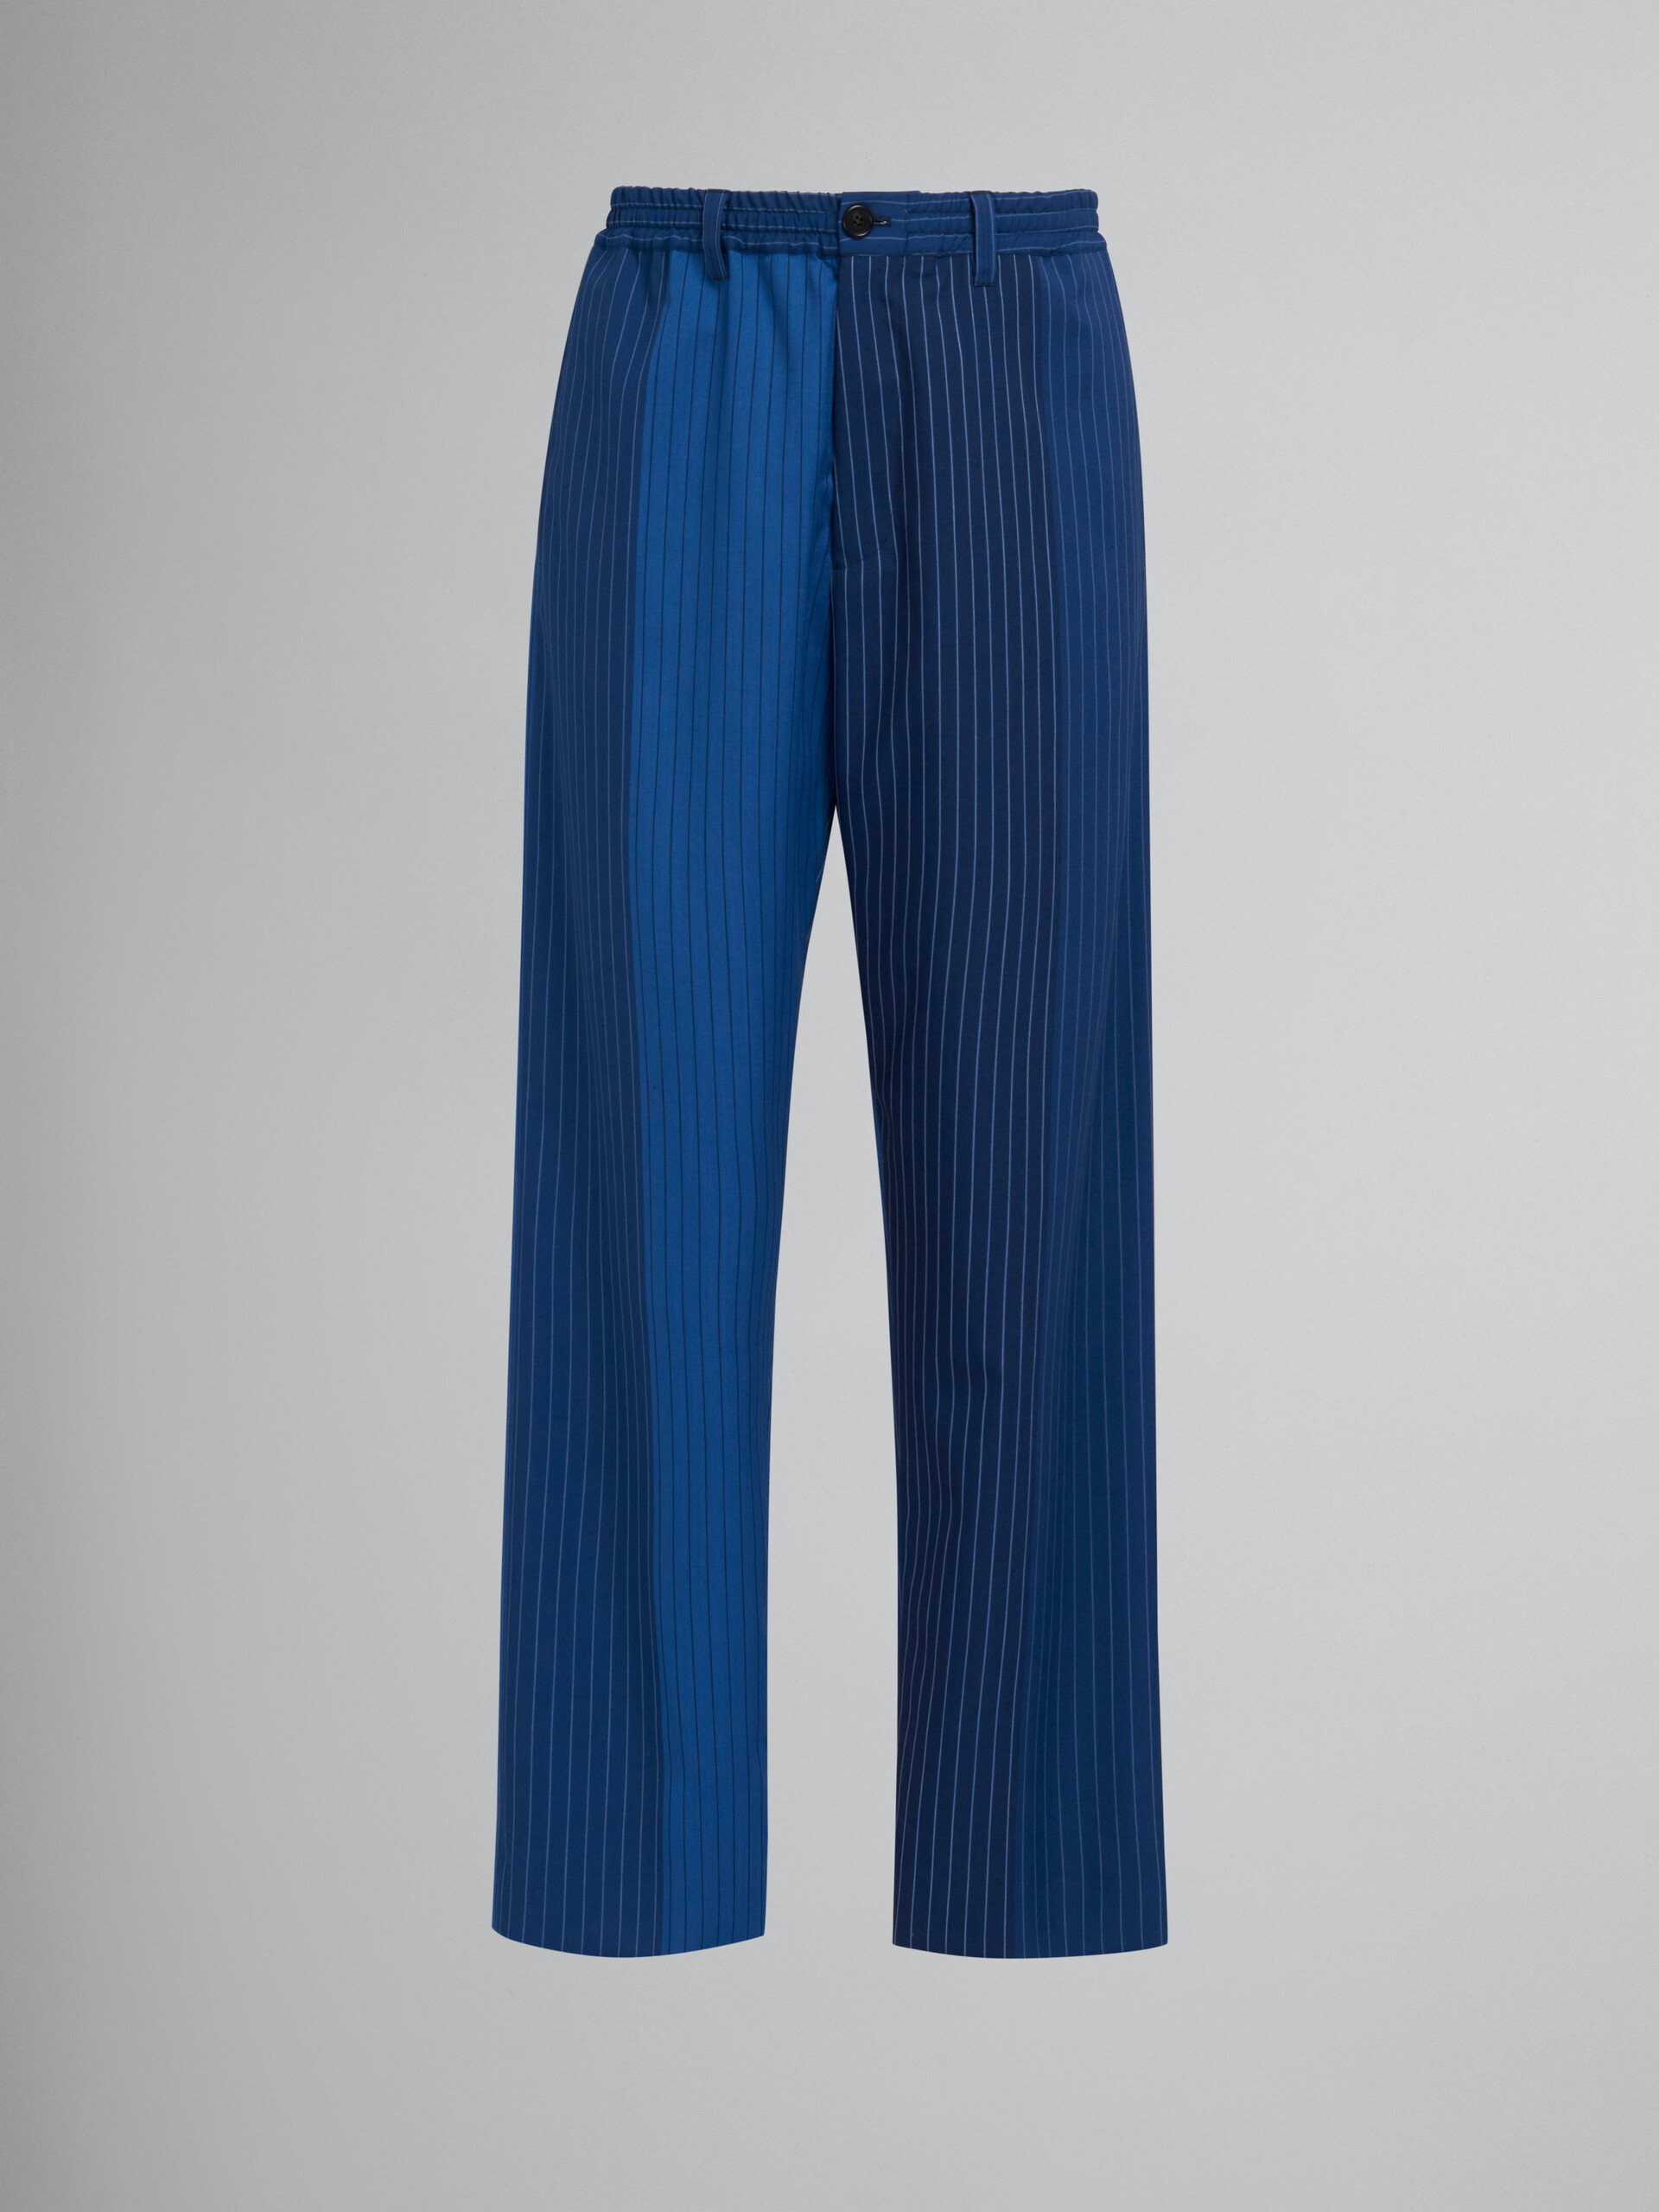 Pantaloni sportivi in lana gessata blu dégradé - Pantaloni - Image 1